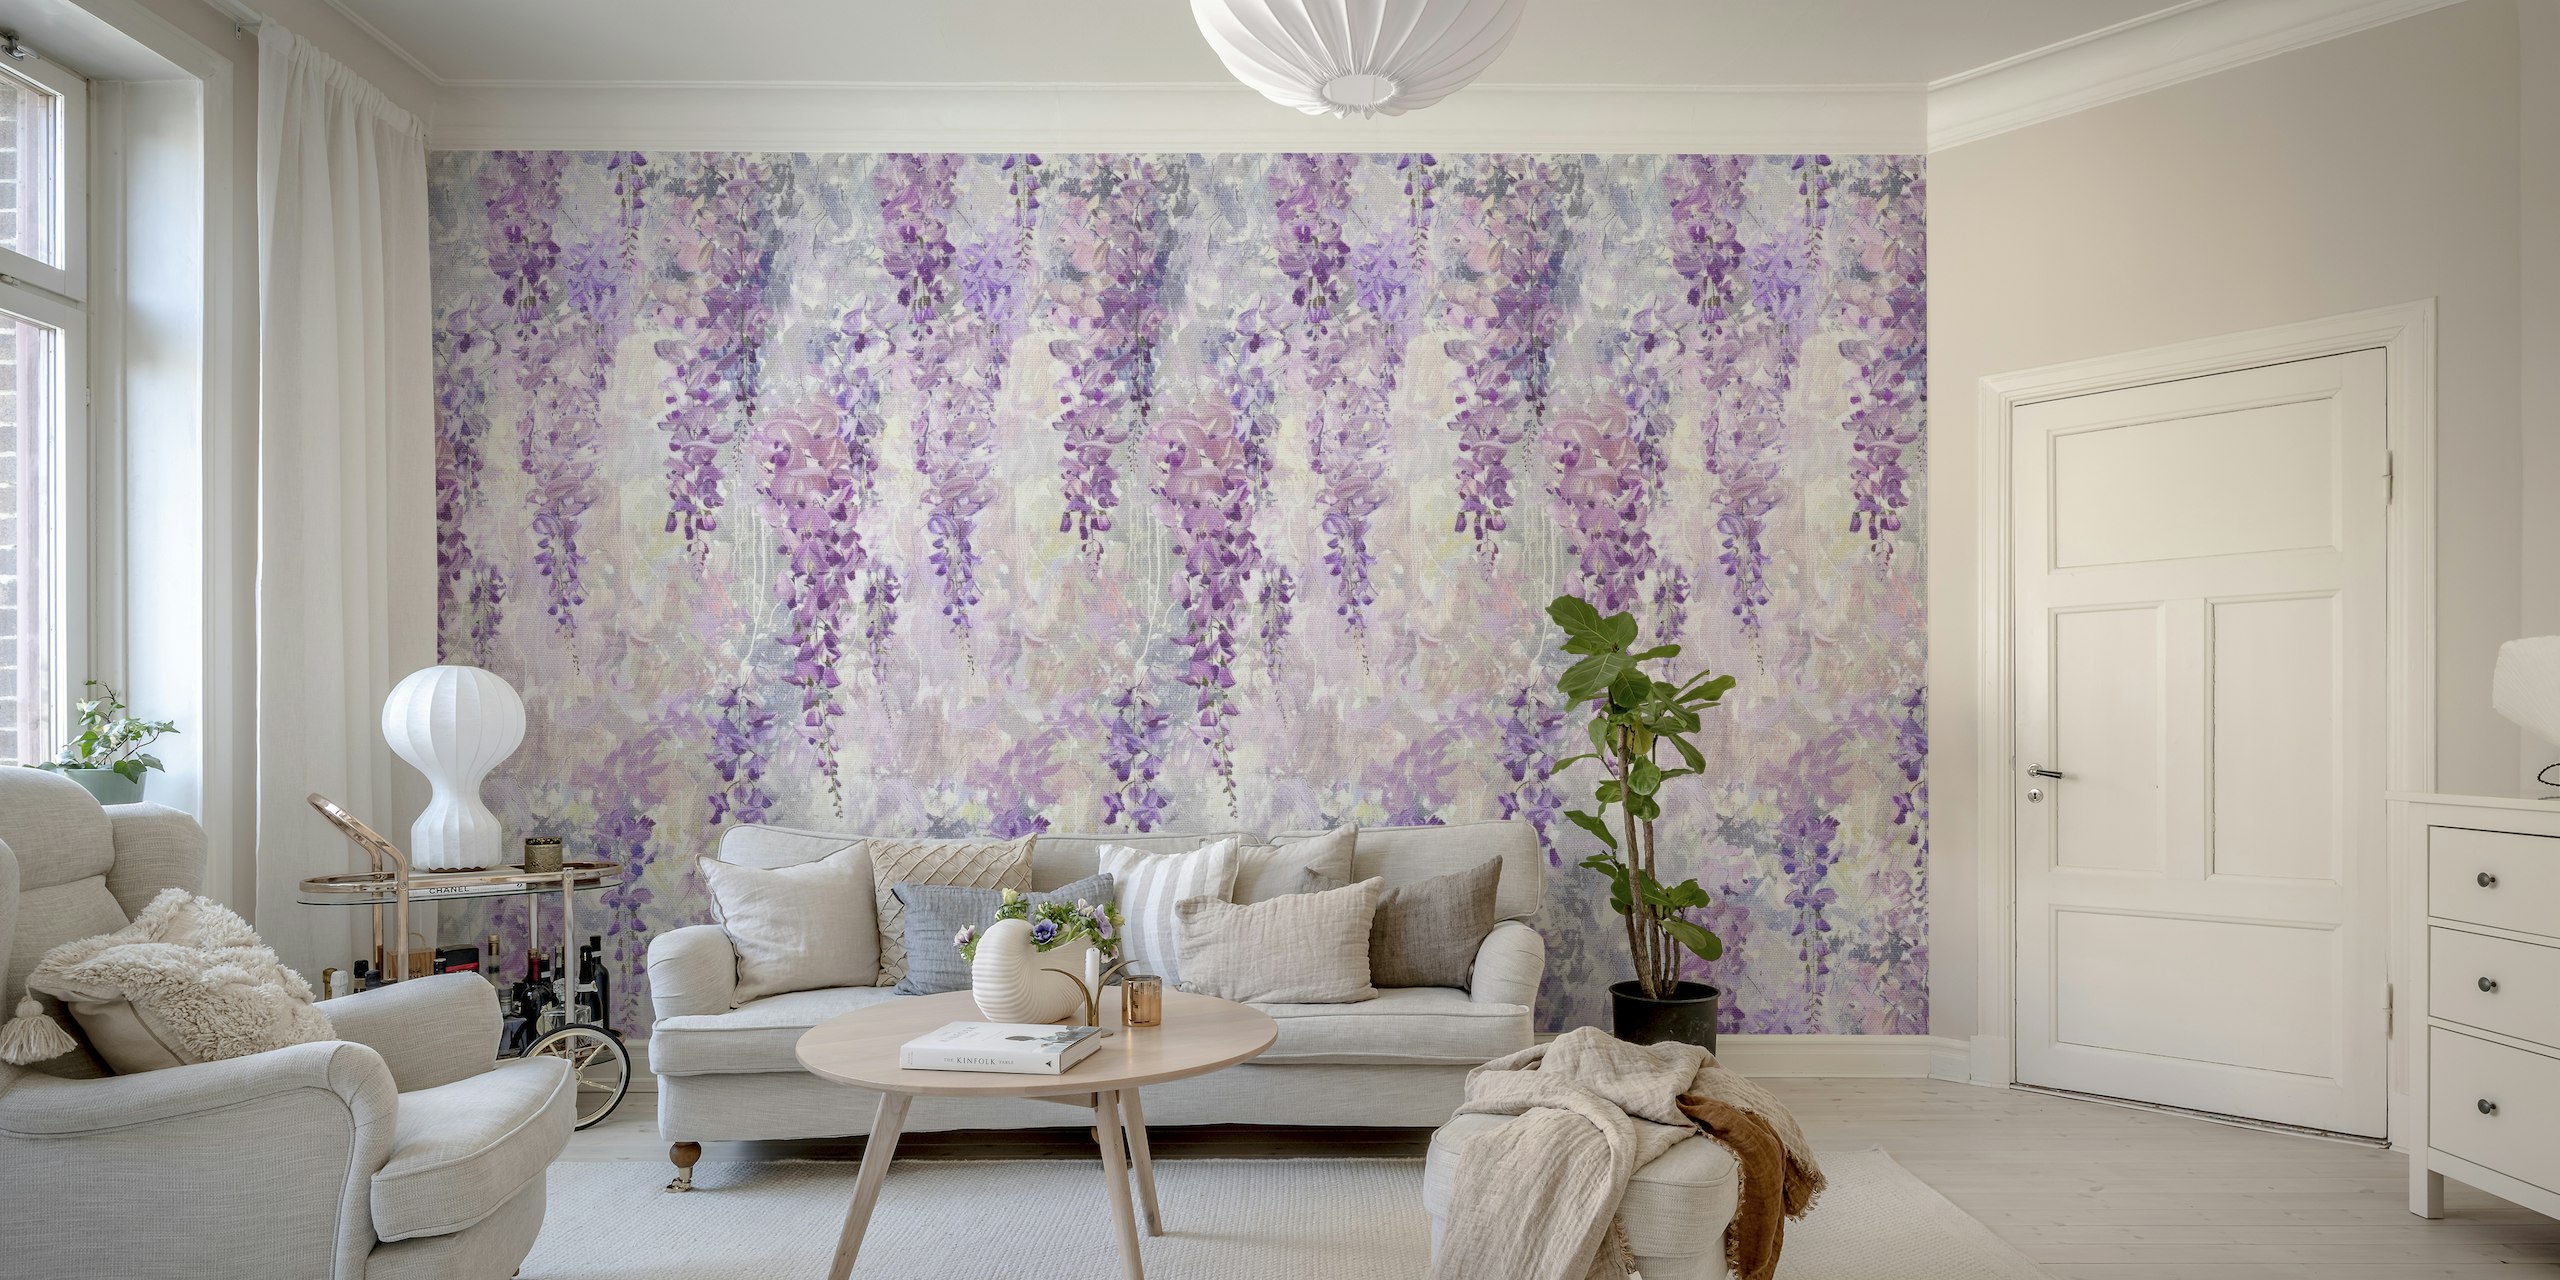 Purpurea Wisteria Flowers Painting wallpaper